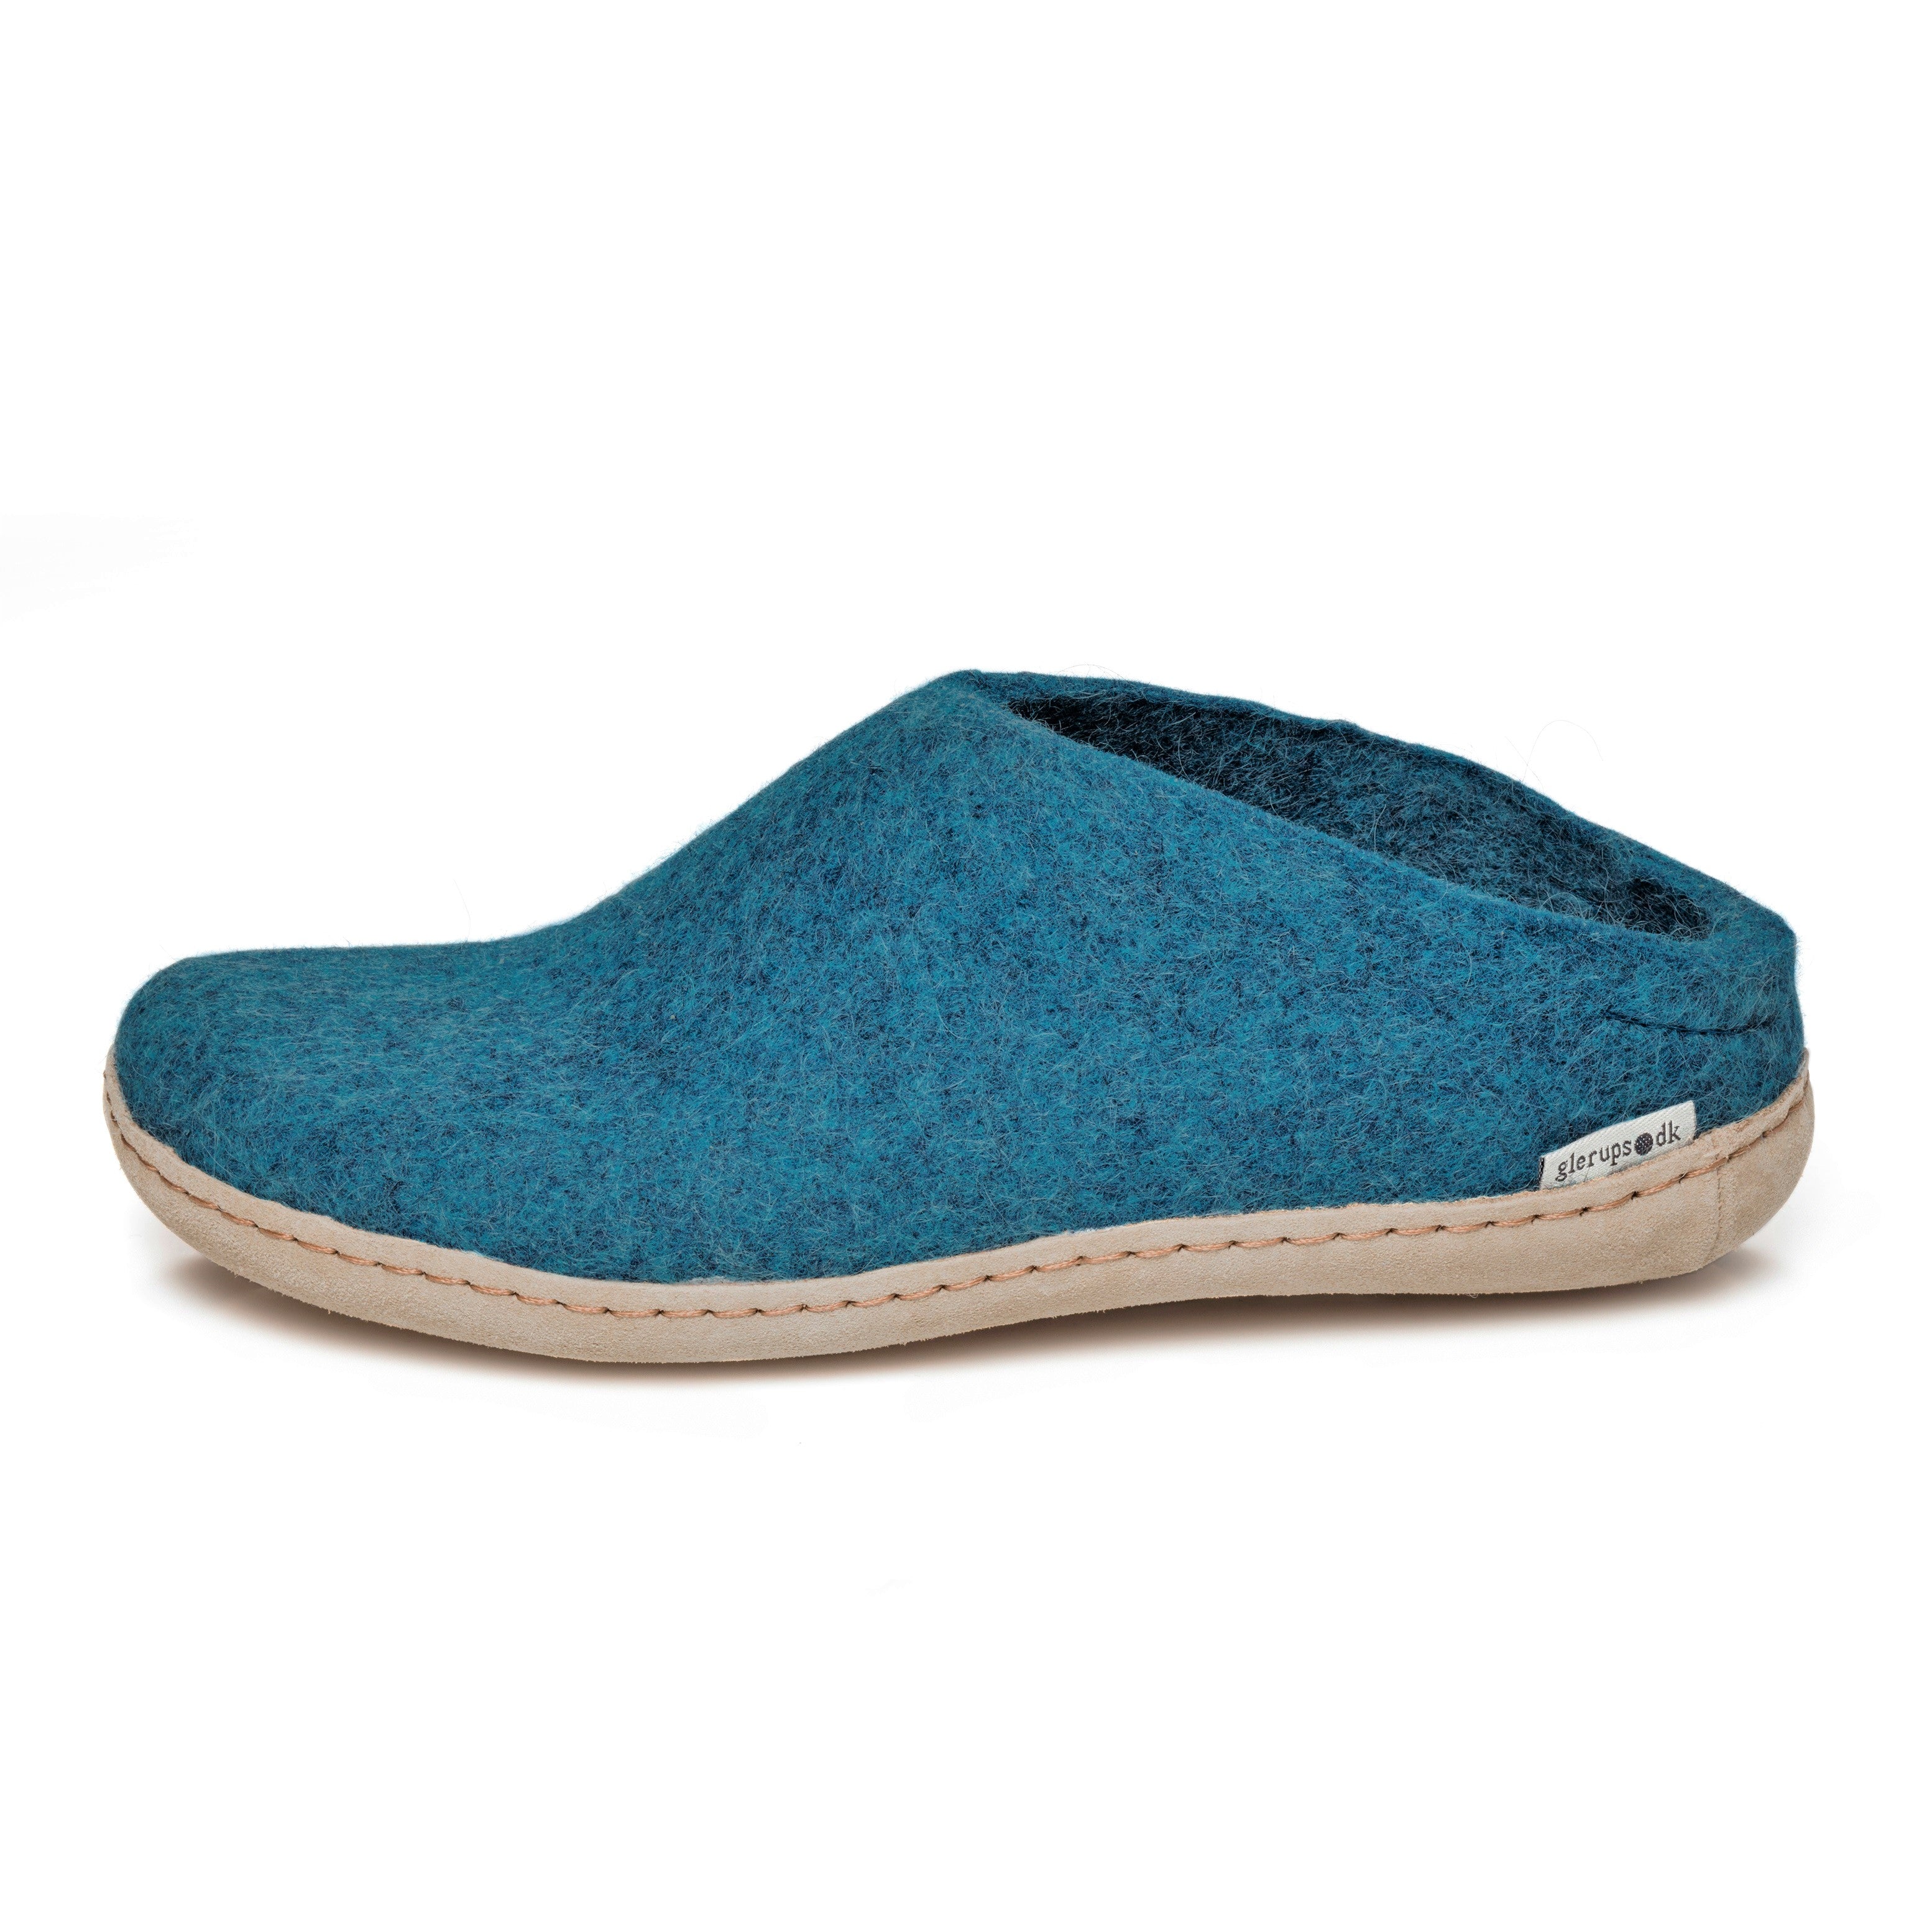 Glerups slipper slip-on leather sole petrol teal blue